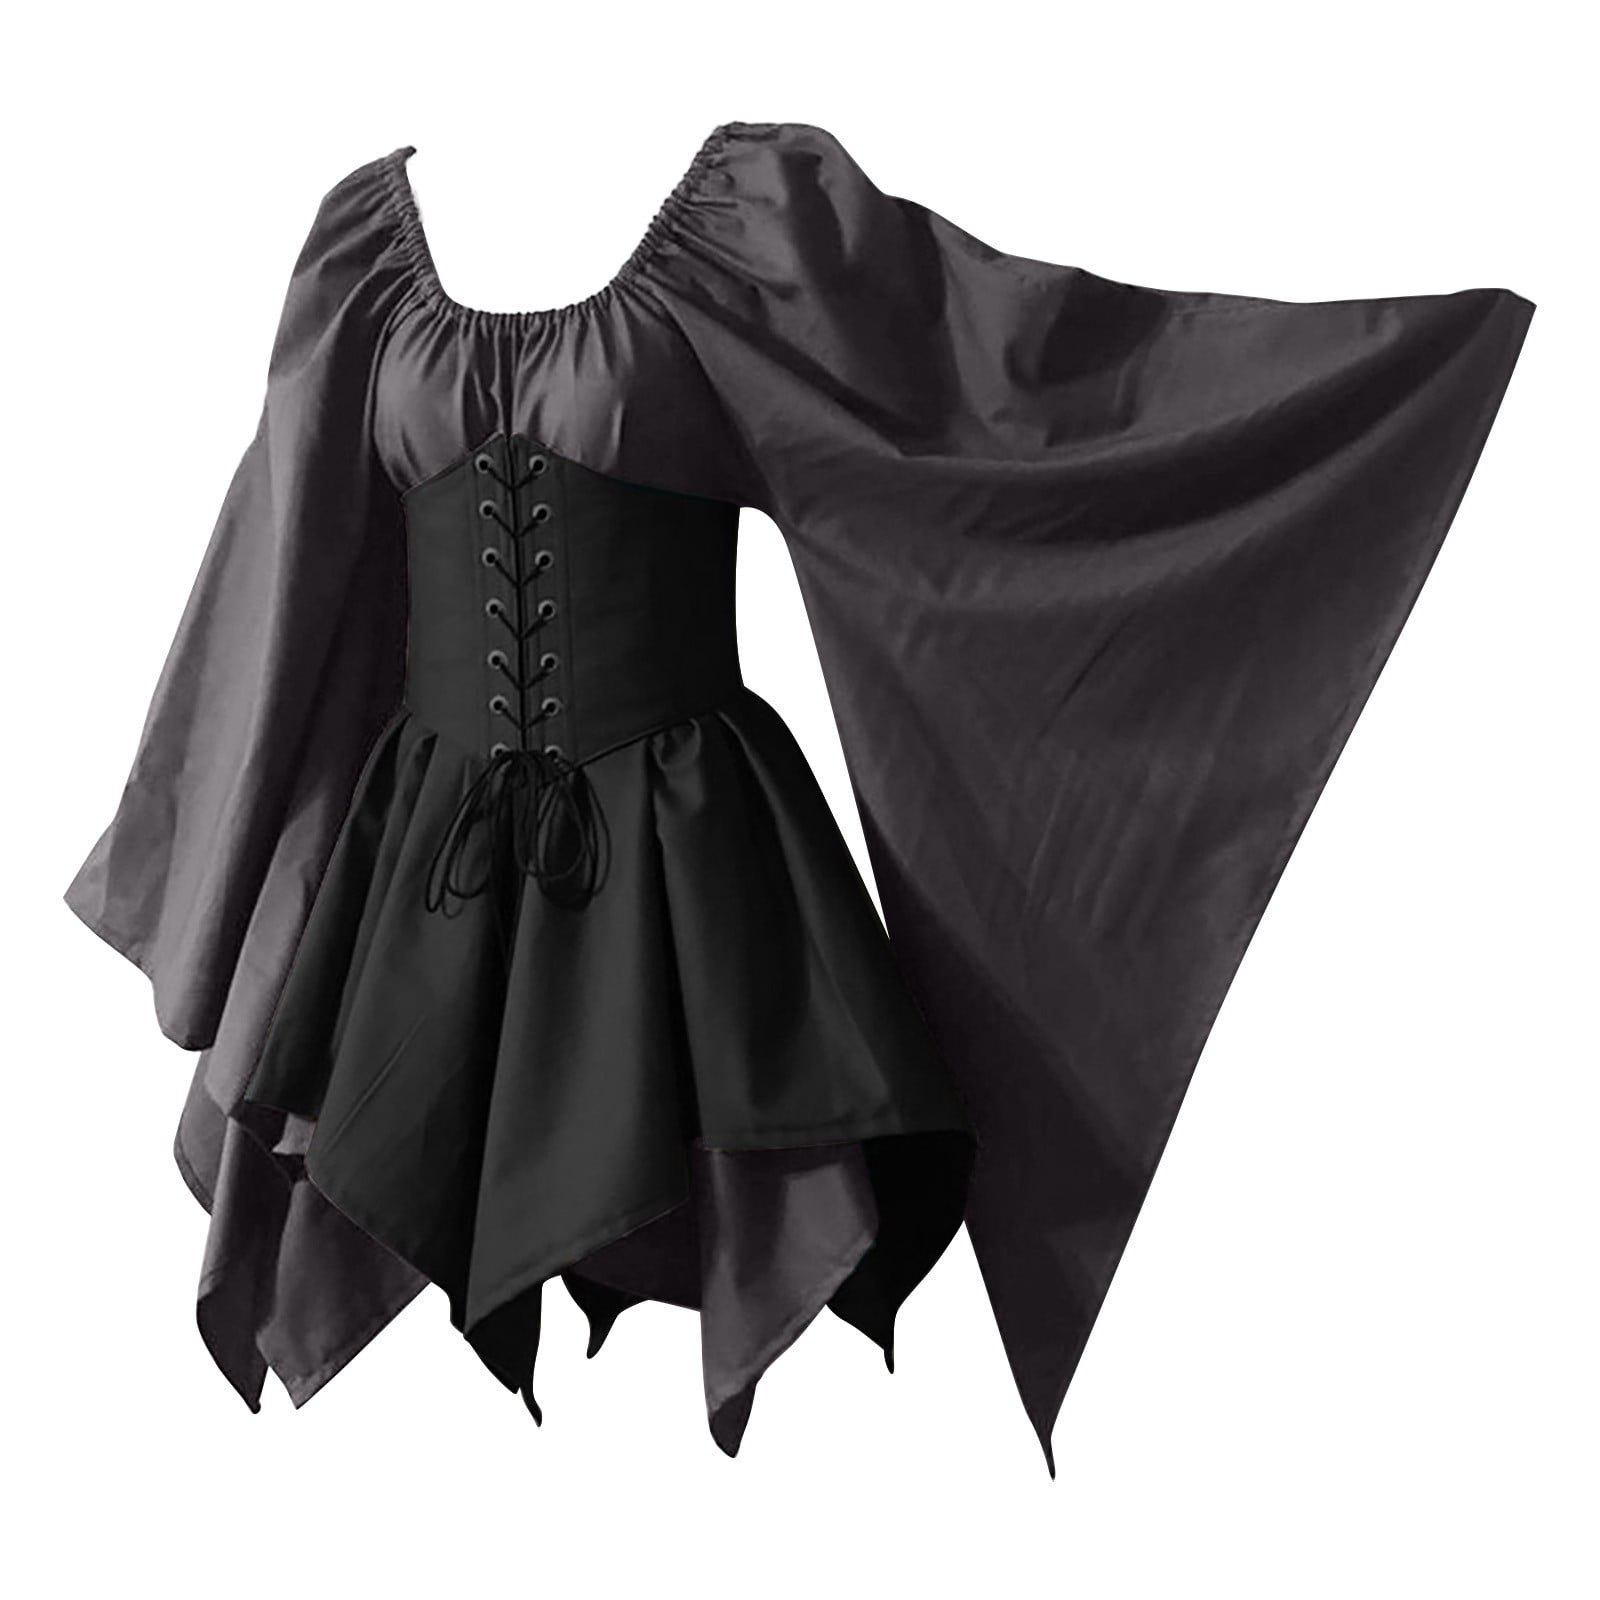 Naughtyhood Women's Medieval Renaissance Costume Dress Vintage Cosplay  Gothic Corset Dress Halloween Costumes for Women 